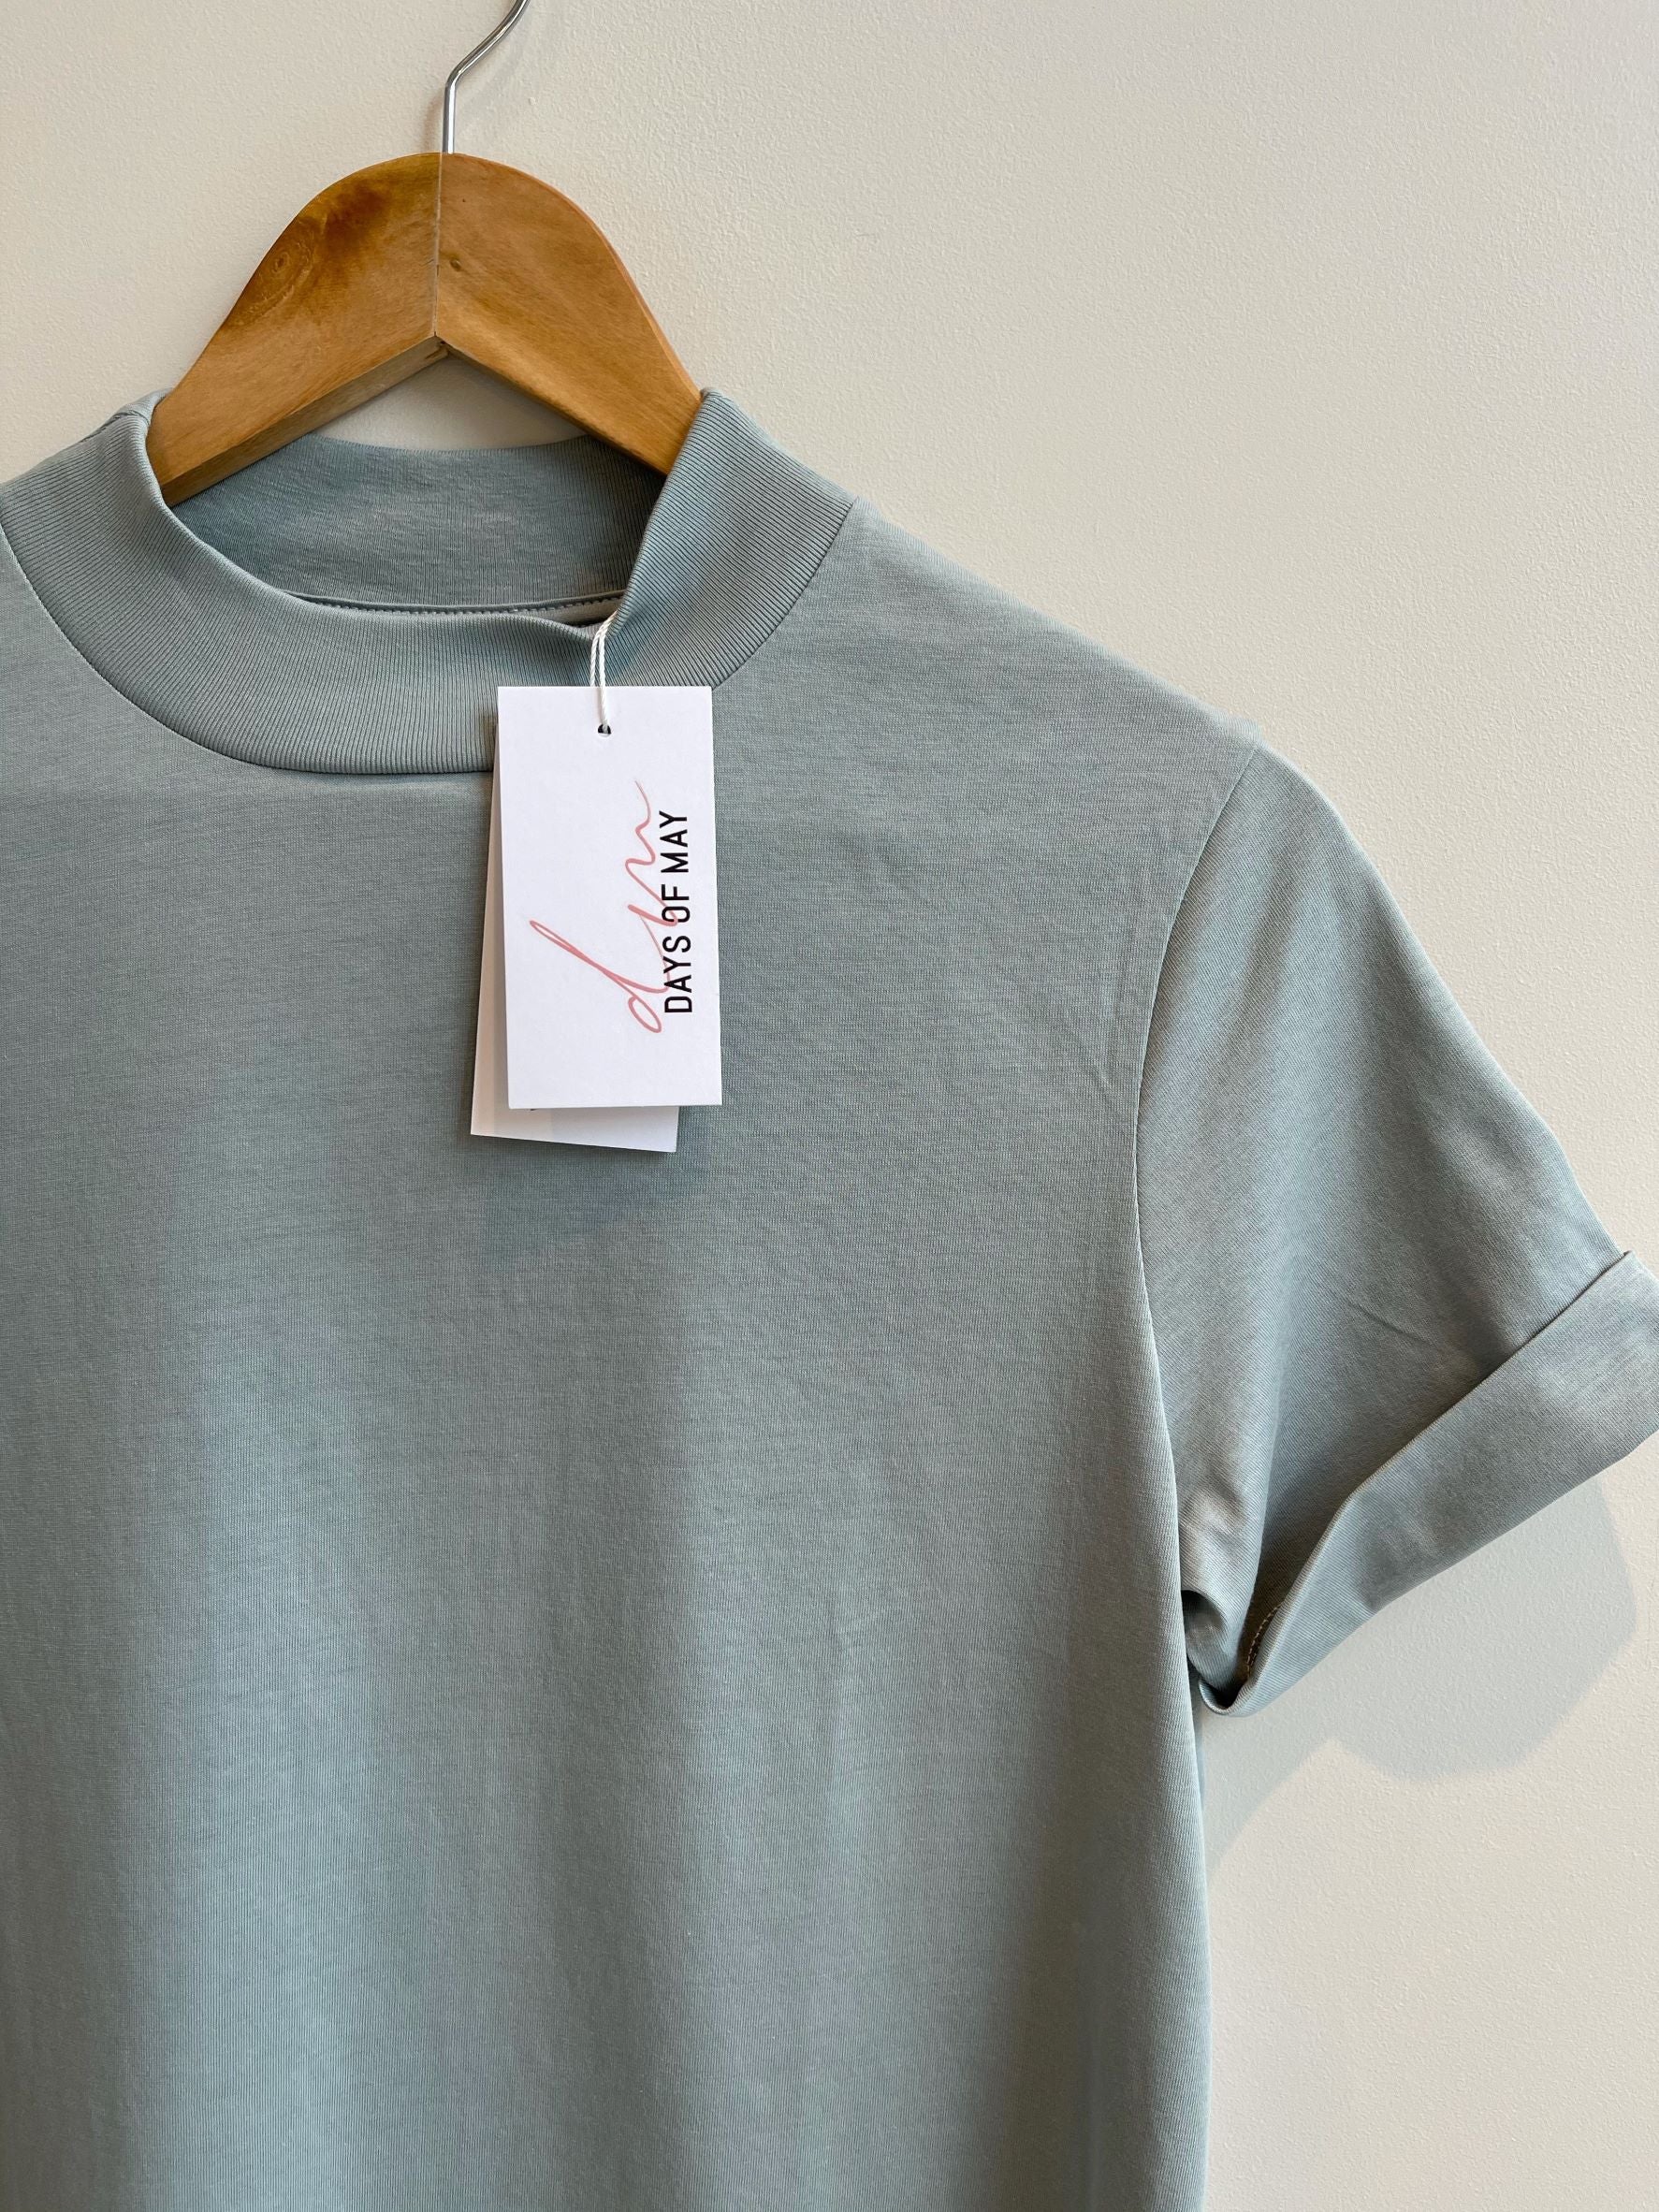 organic cotton tee shirt in grey